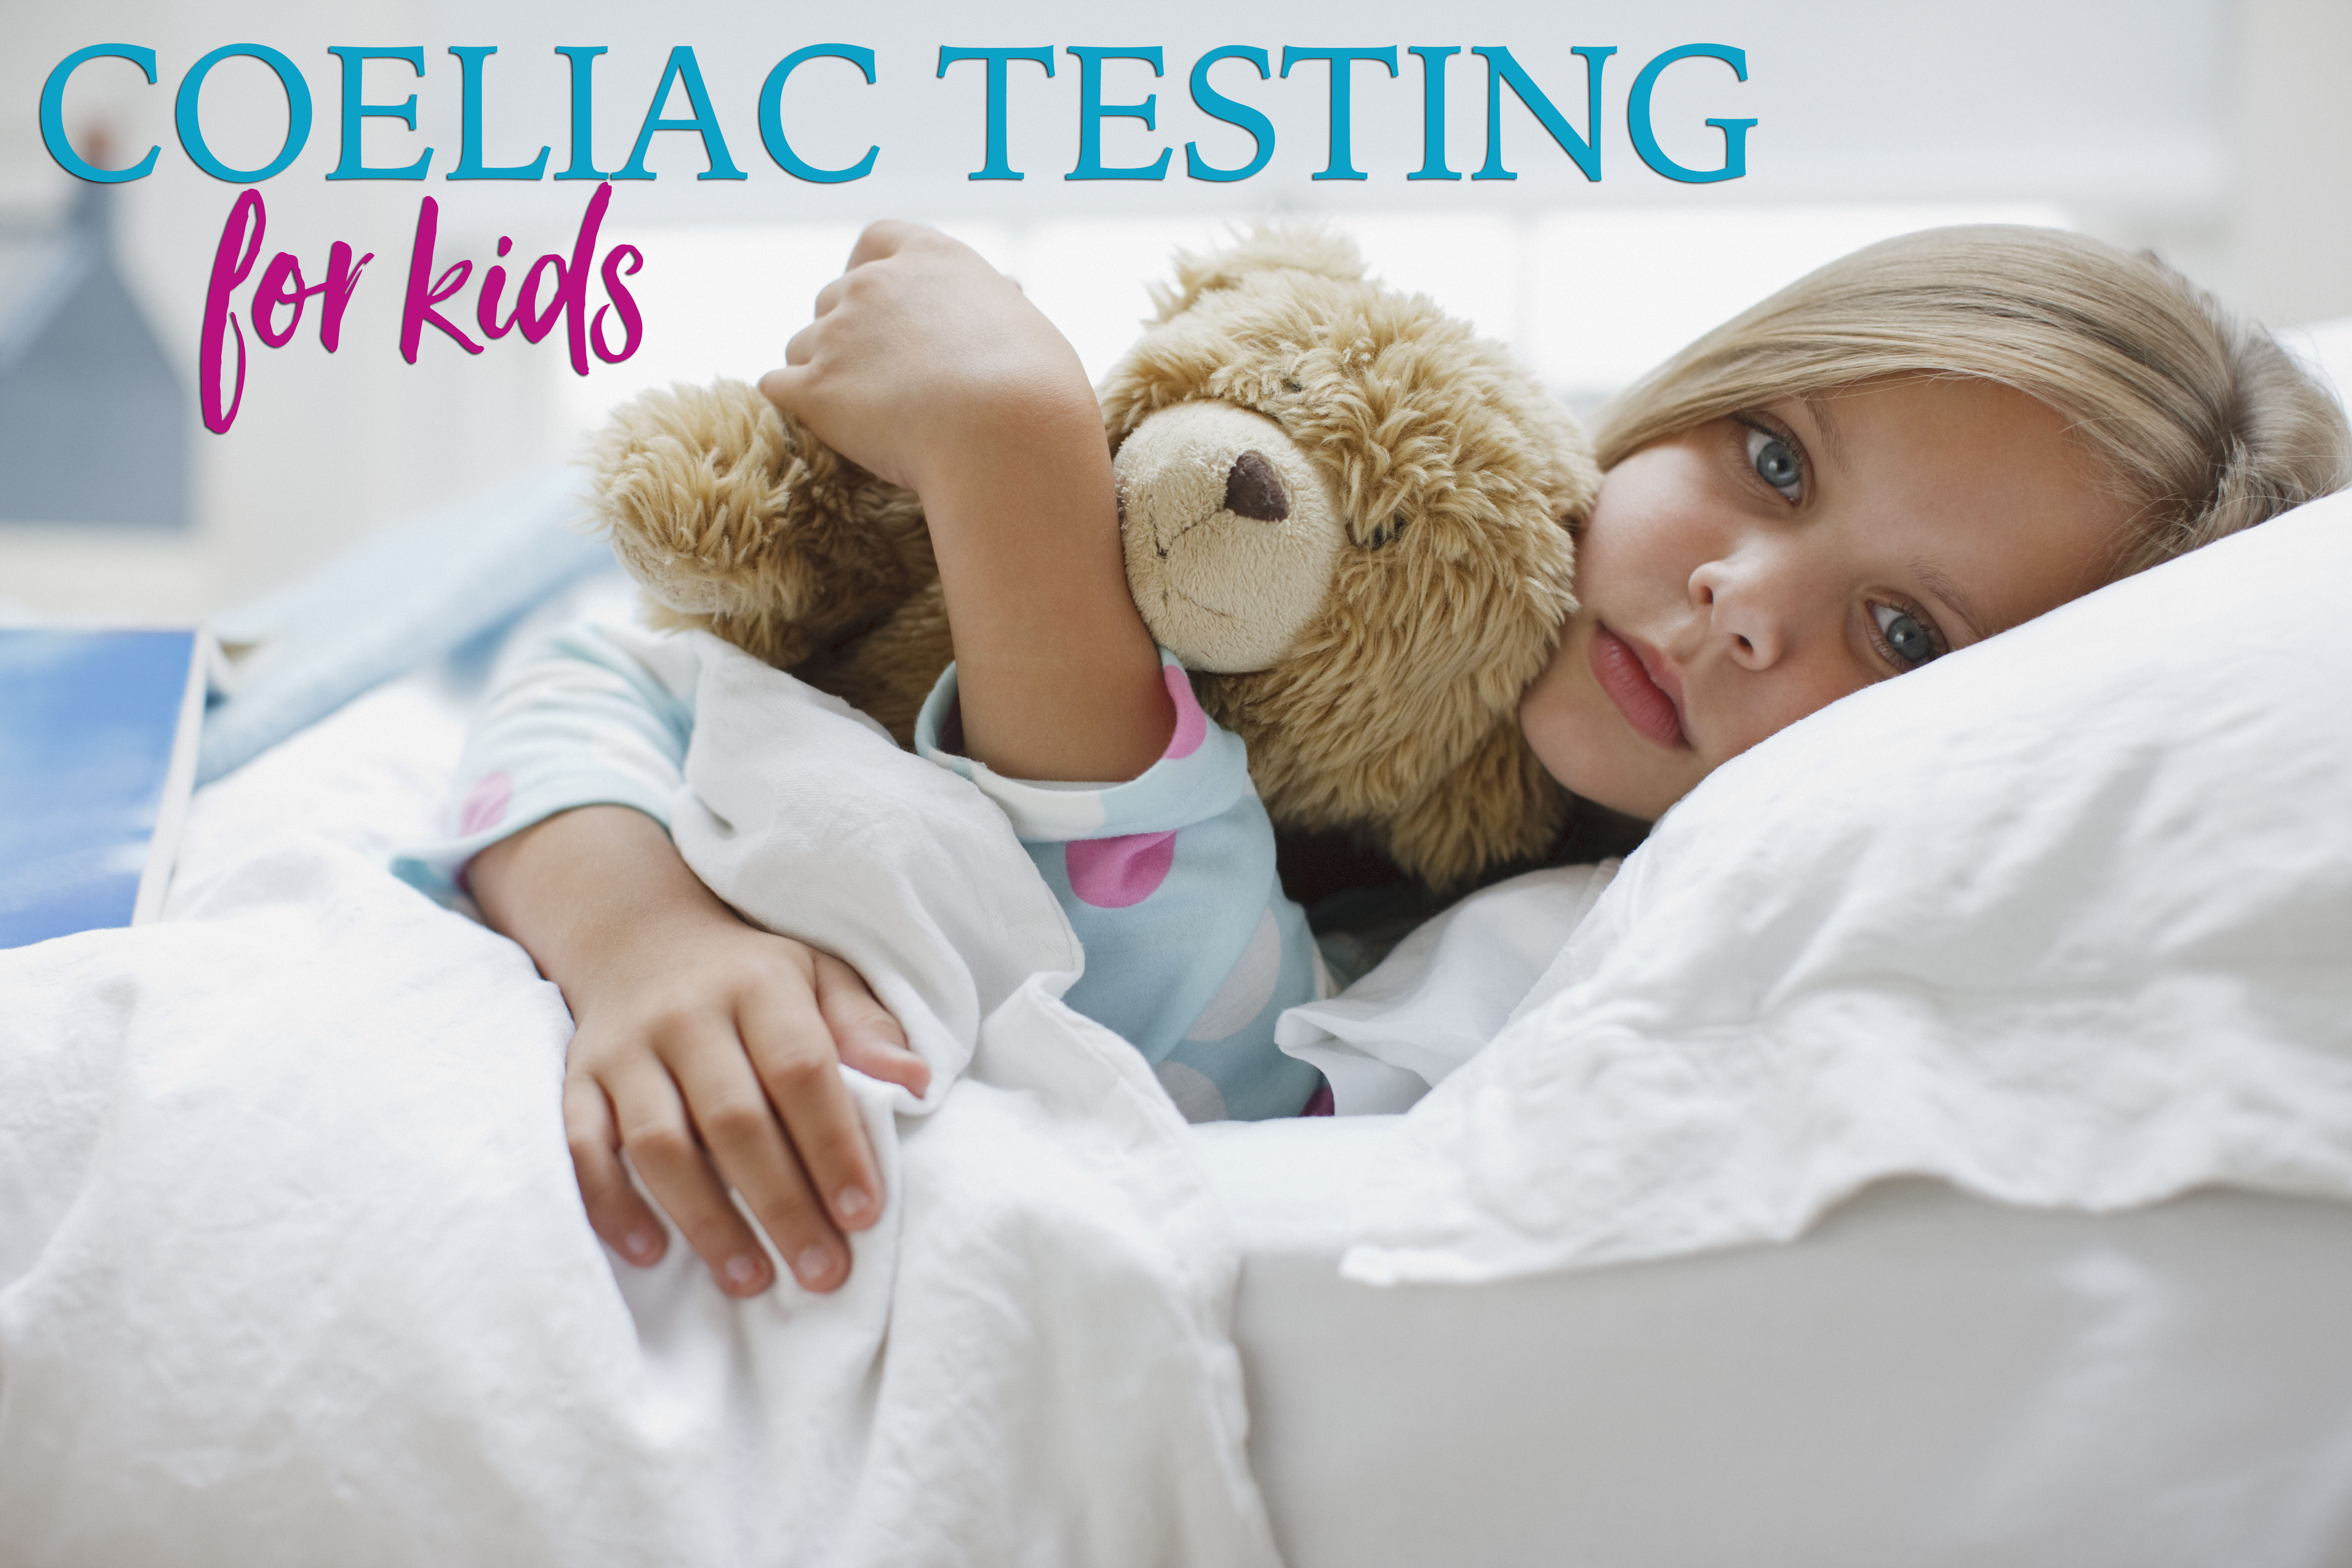 Coeliac testing for kids